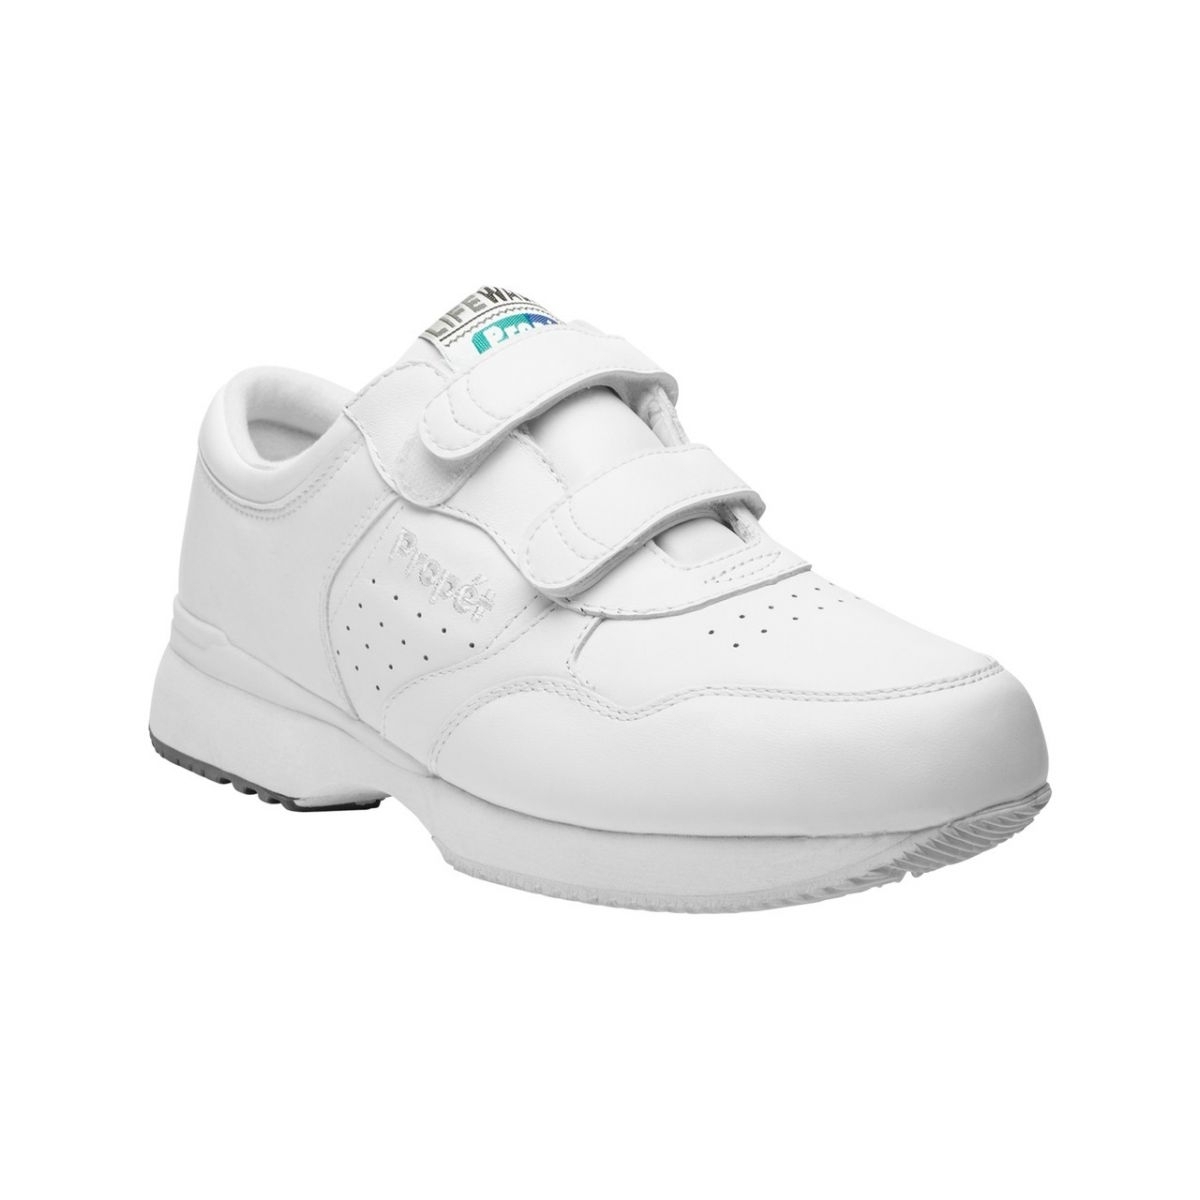 Propet Men's Life Walker Strap Shoe White - M3705WHT WHITE - WHITE, 17 Wide